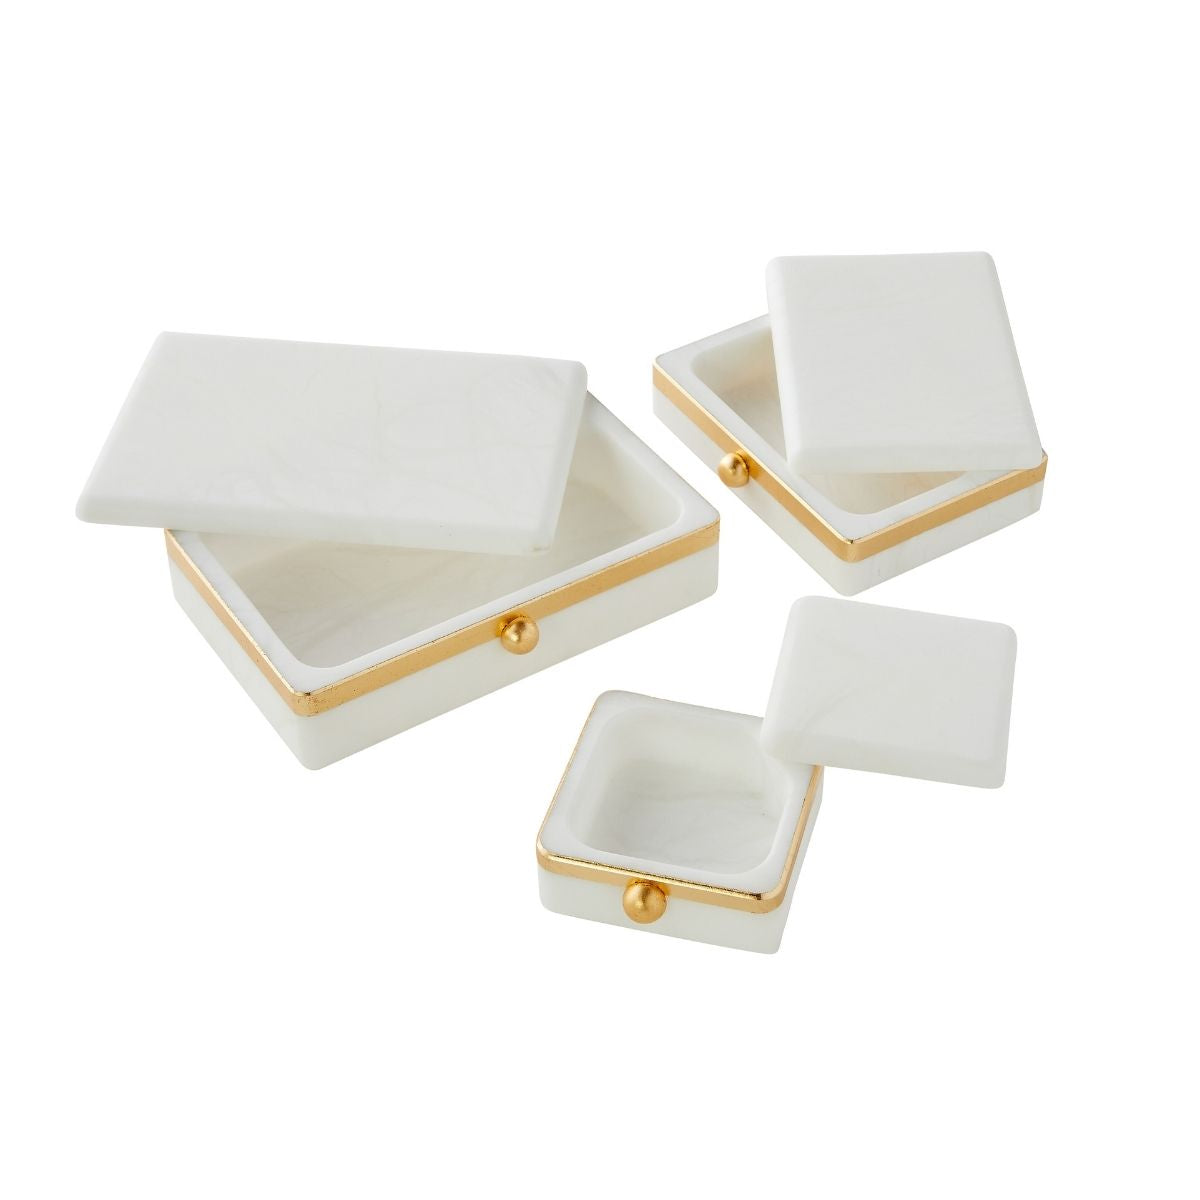 Medium Gold Band Alabaster Box